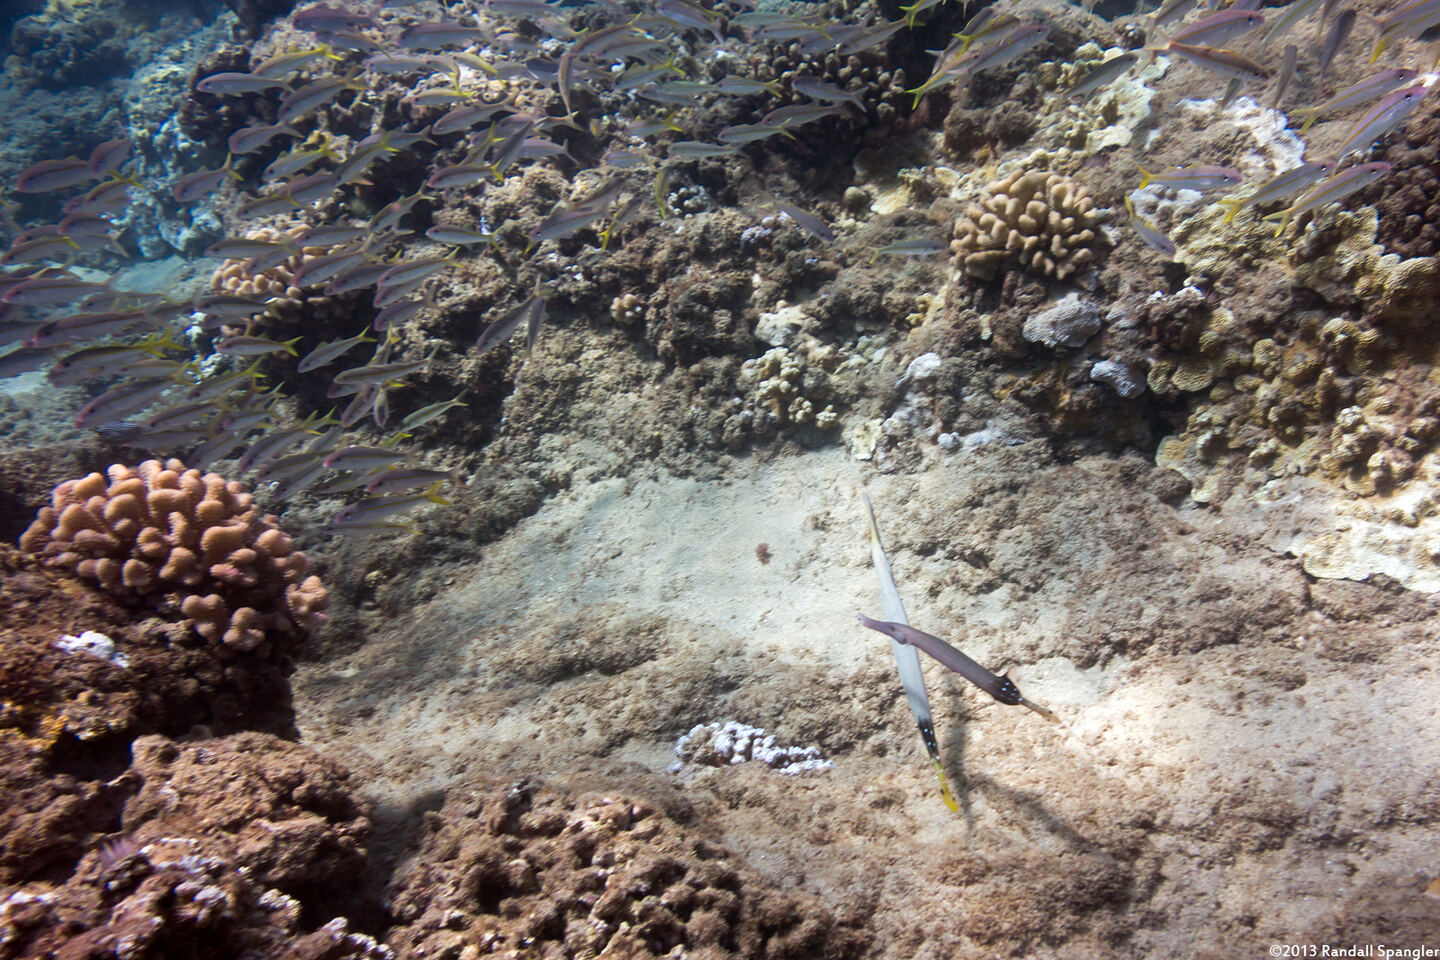 Aulostomus chinensis (Trumpetfish); Trumpetfish matching yellowfin goatfish colors